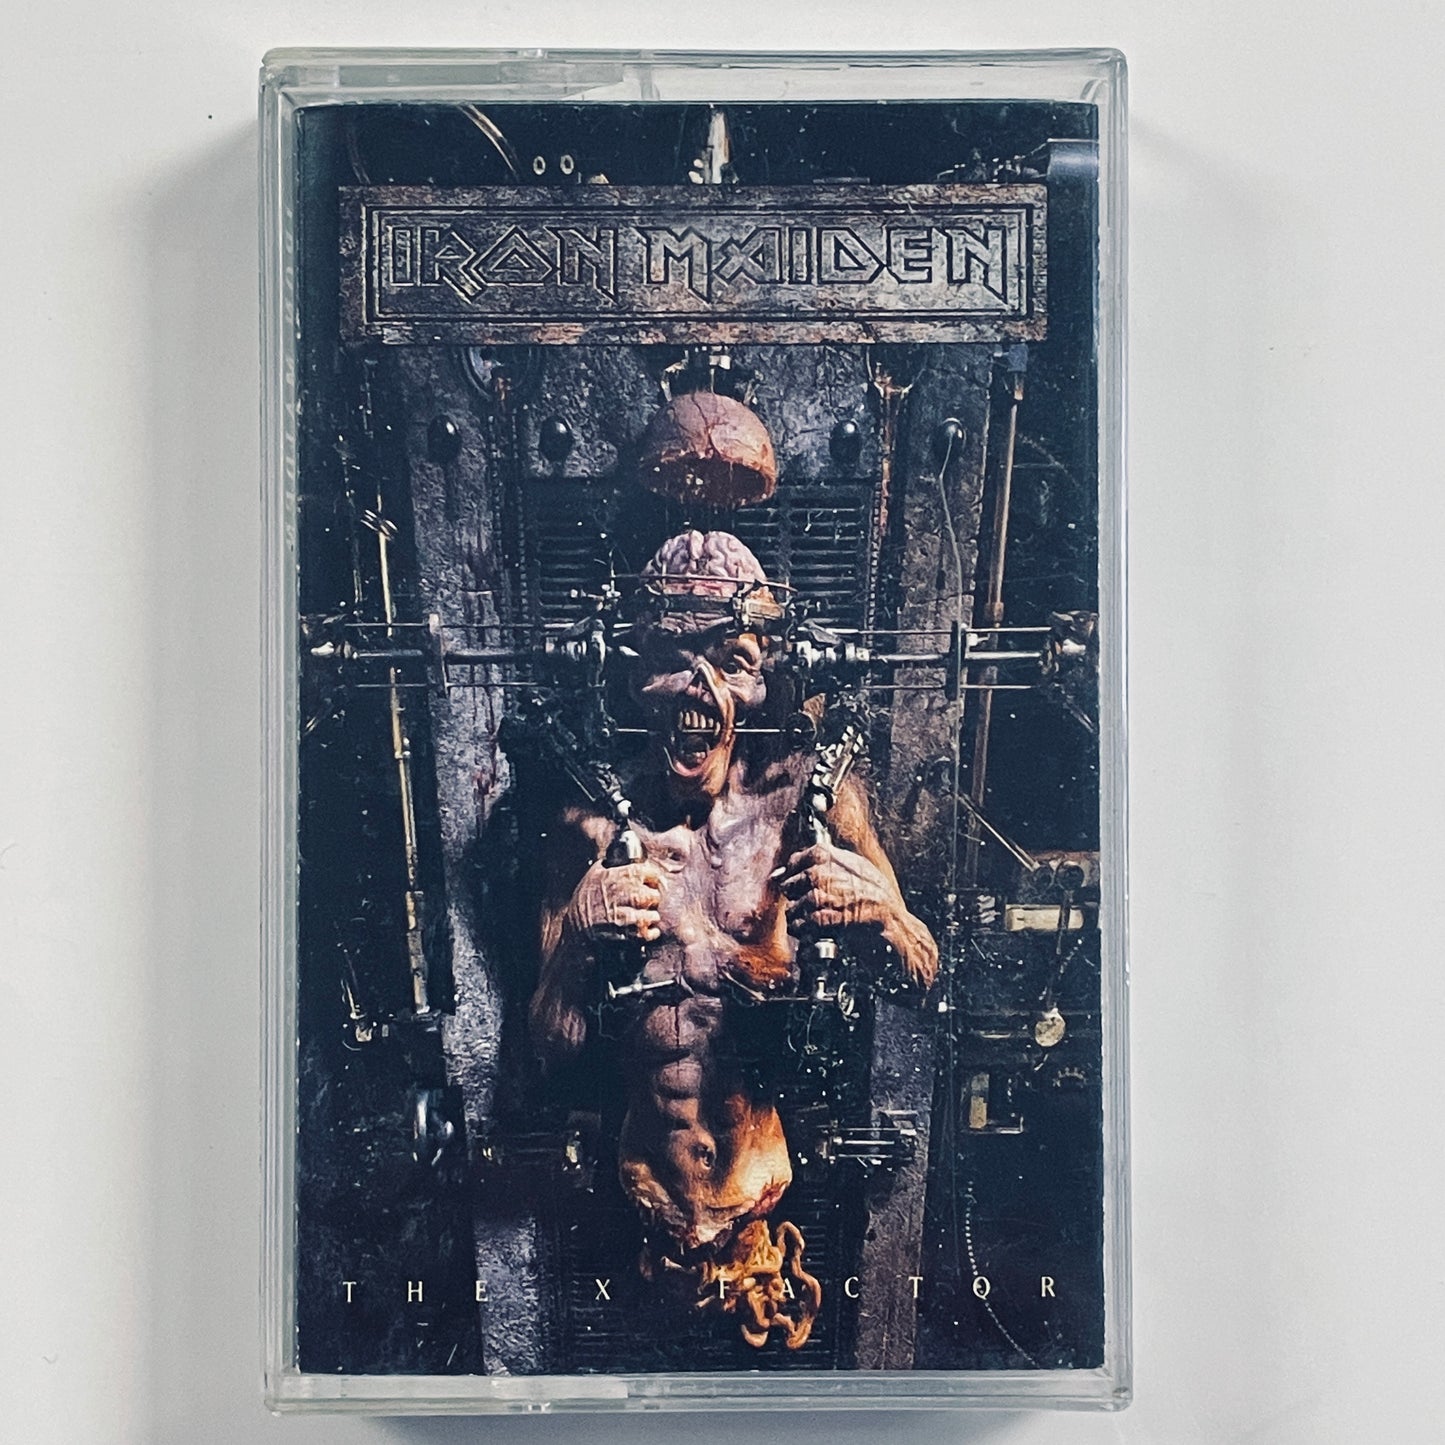 Iron Maiden - The X Factor original cassette tape